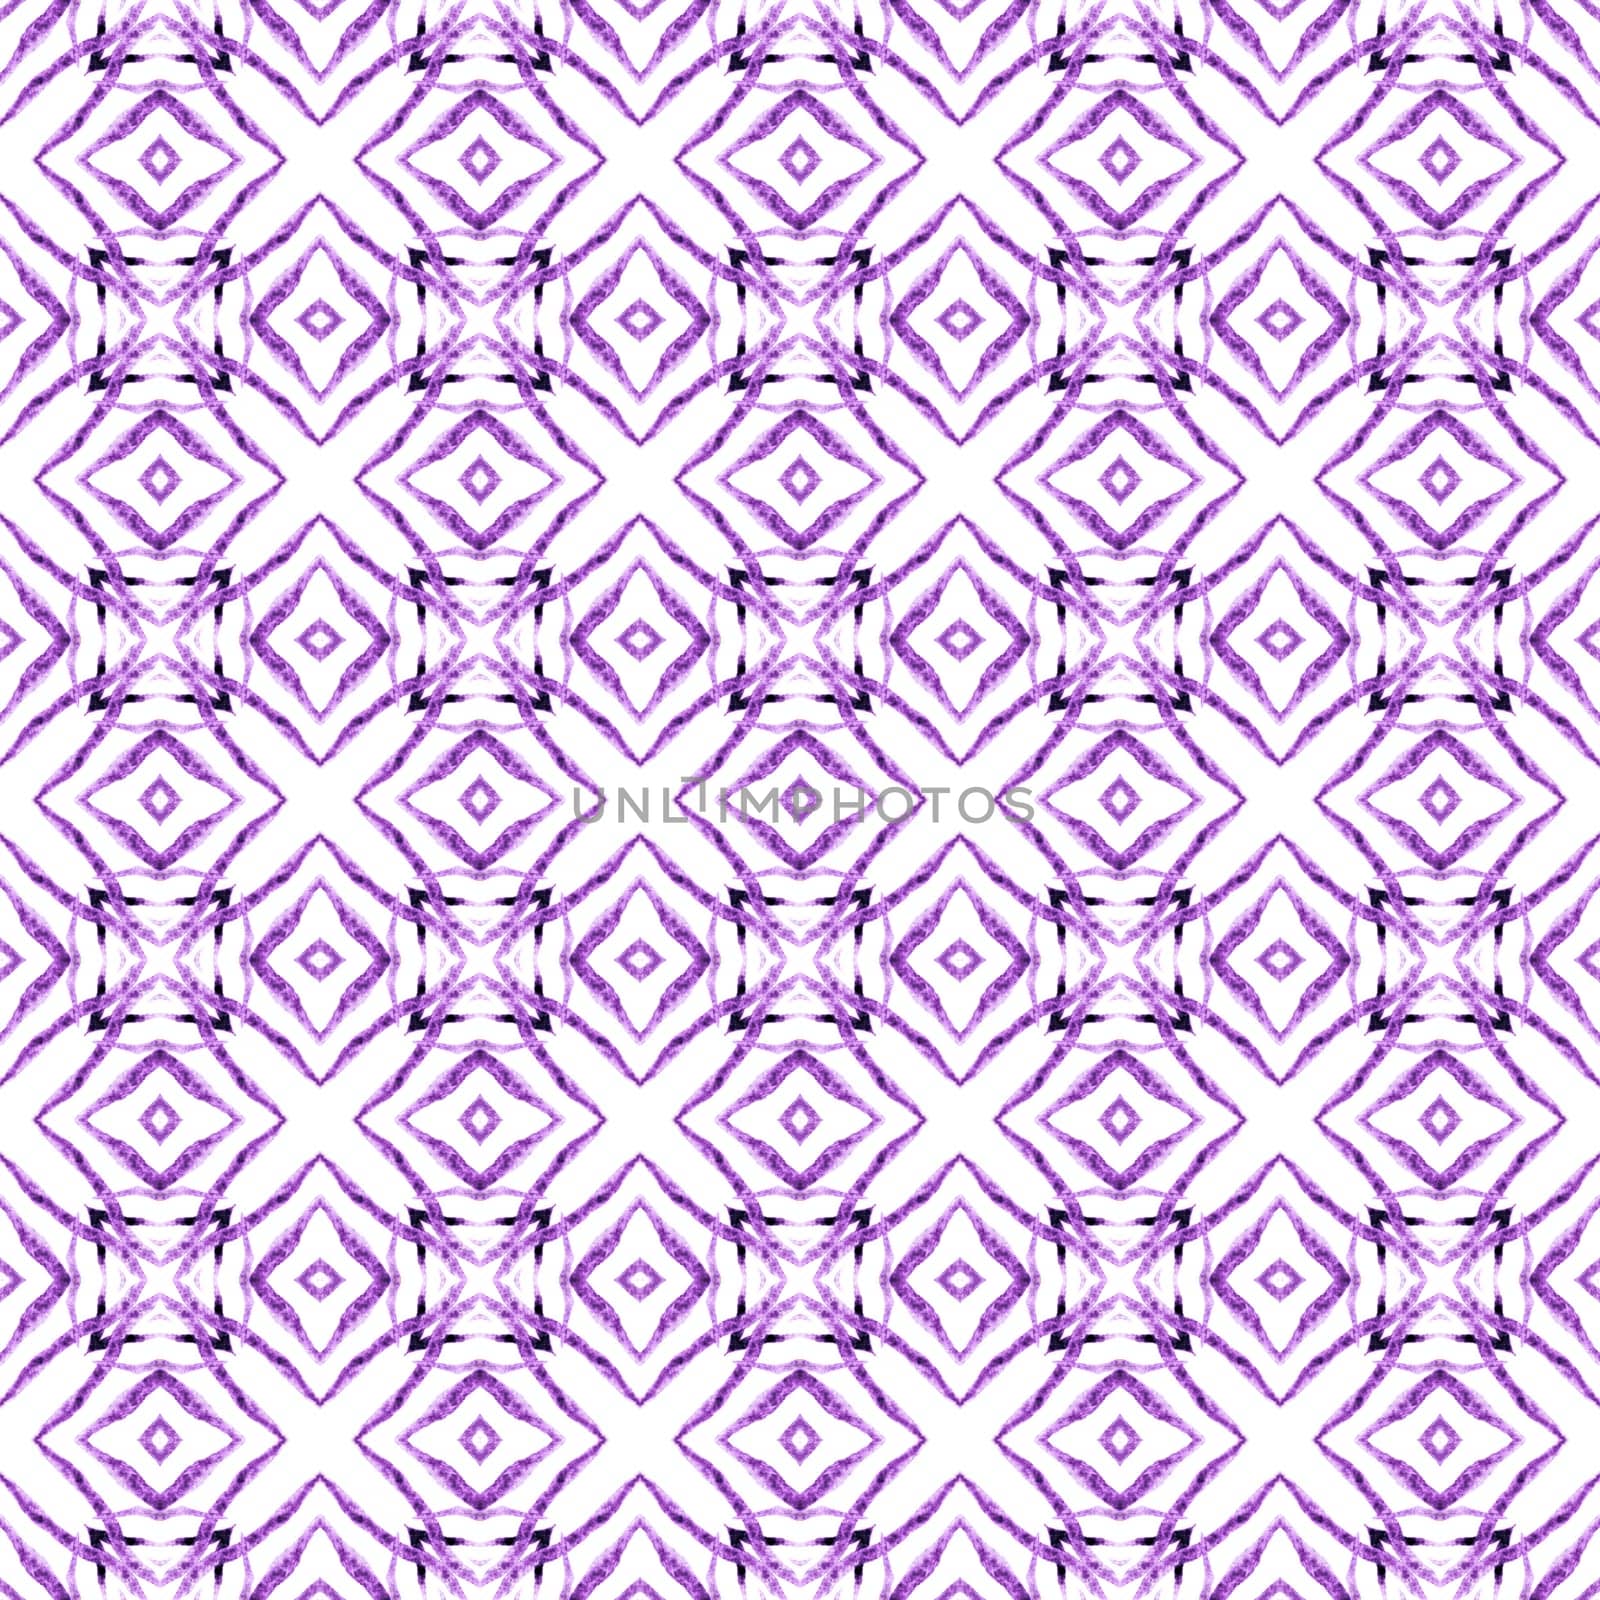 Textile ready enchanting print, swimwear fabric, wallpaper, wrapping. Purple symmetrical boho chic summer design. Arabesque hand drawn design. Oriental arabesque hand drawn border.